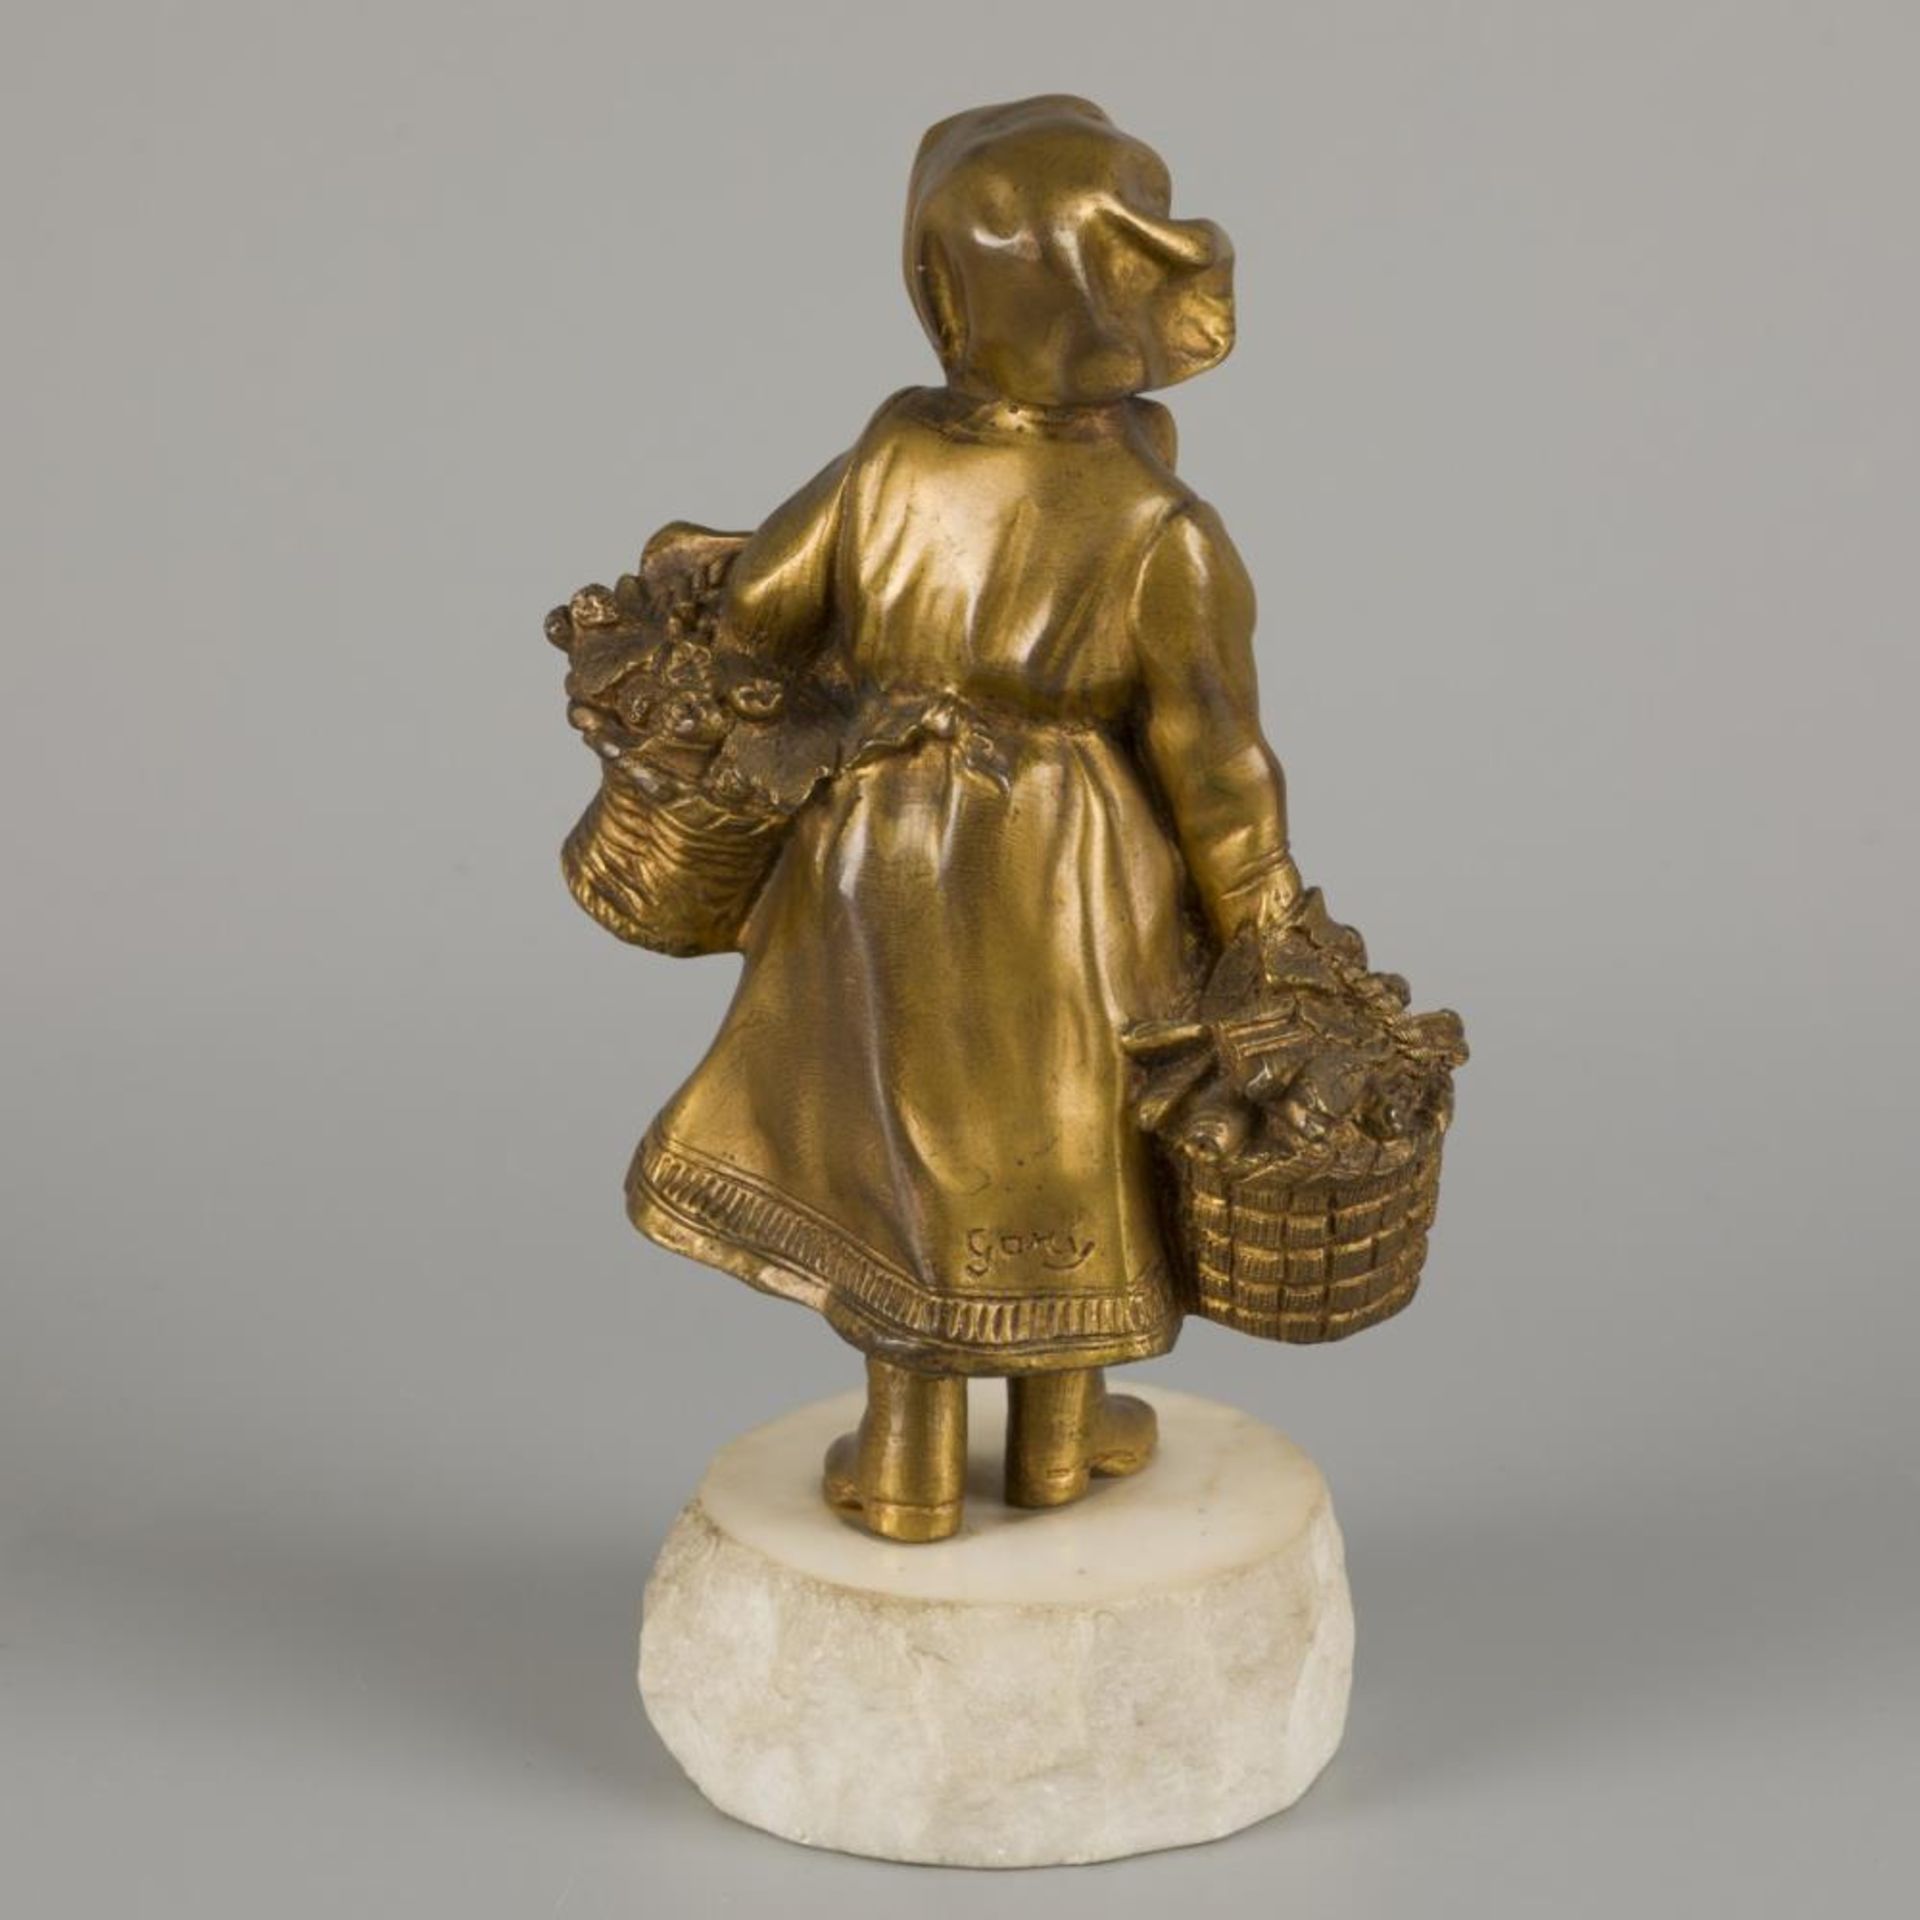 Affortunato Gory (XIX-XX), A bronze 'chryselephantine' sculpture depicting a dancer as a flower girl - Image 3 of 6